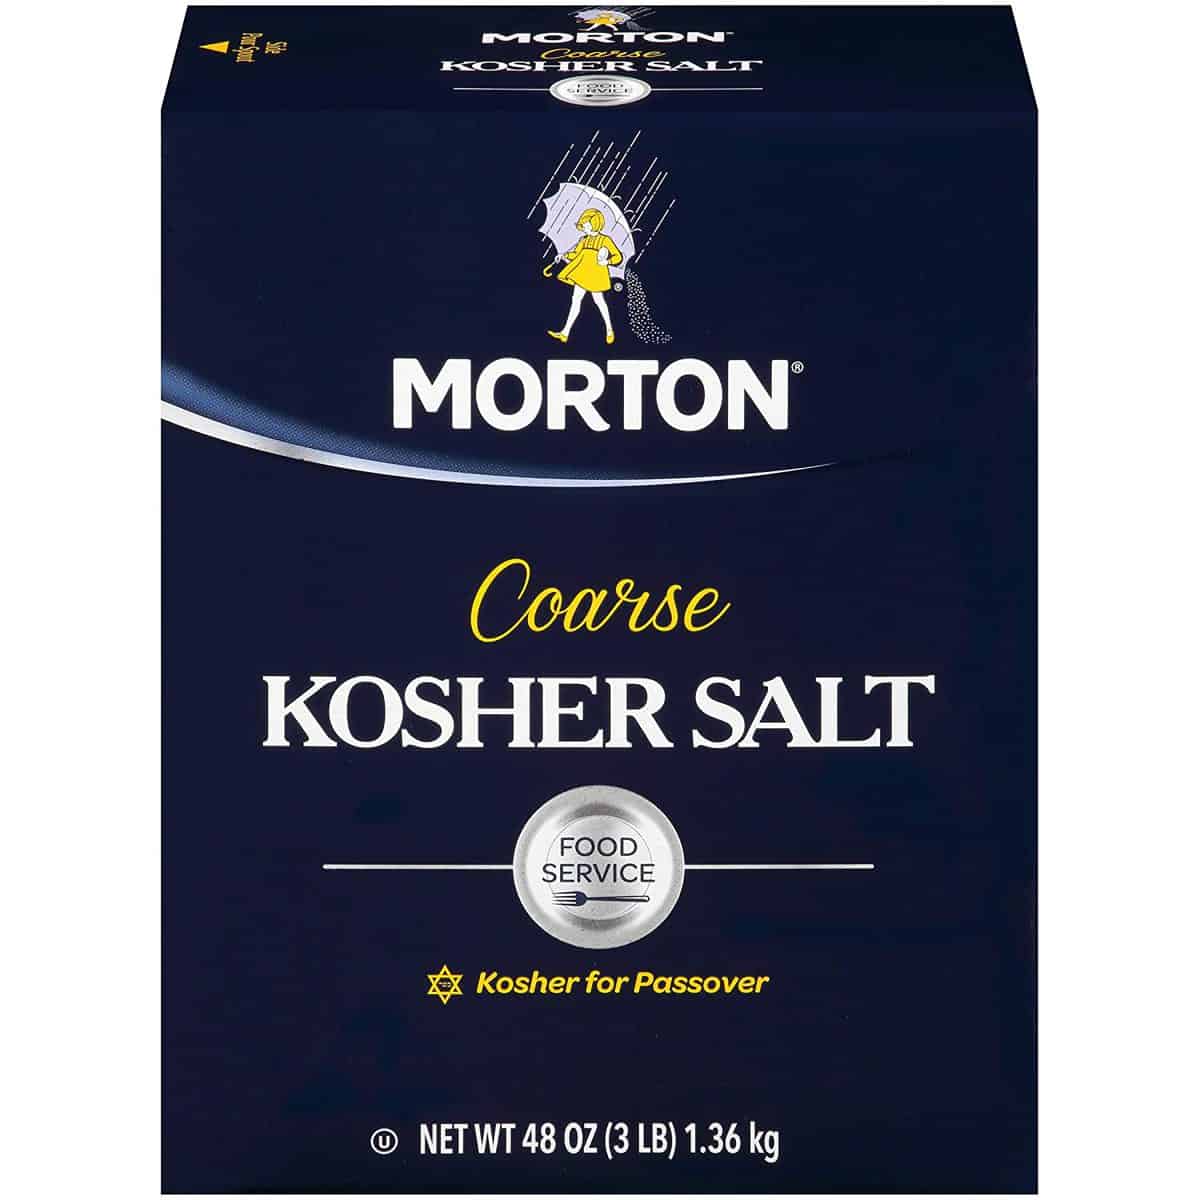 a box of morton kosher salt